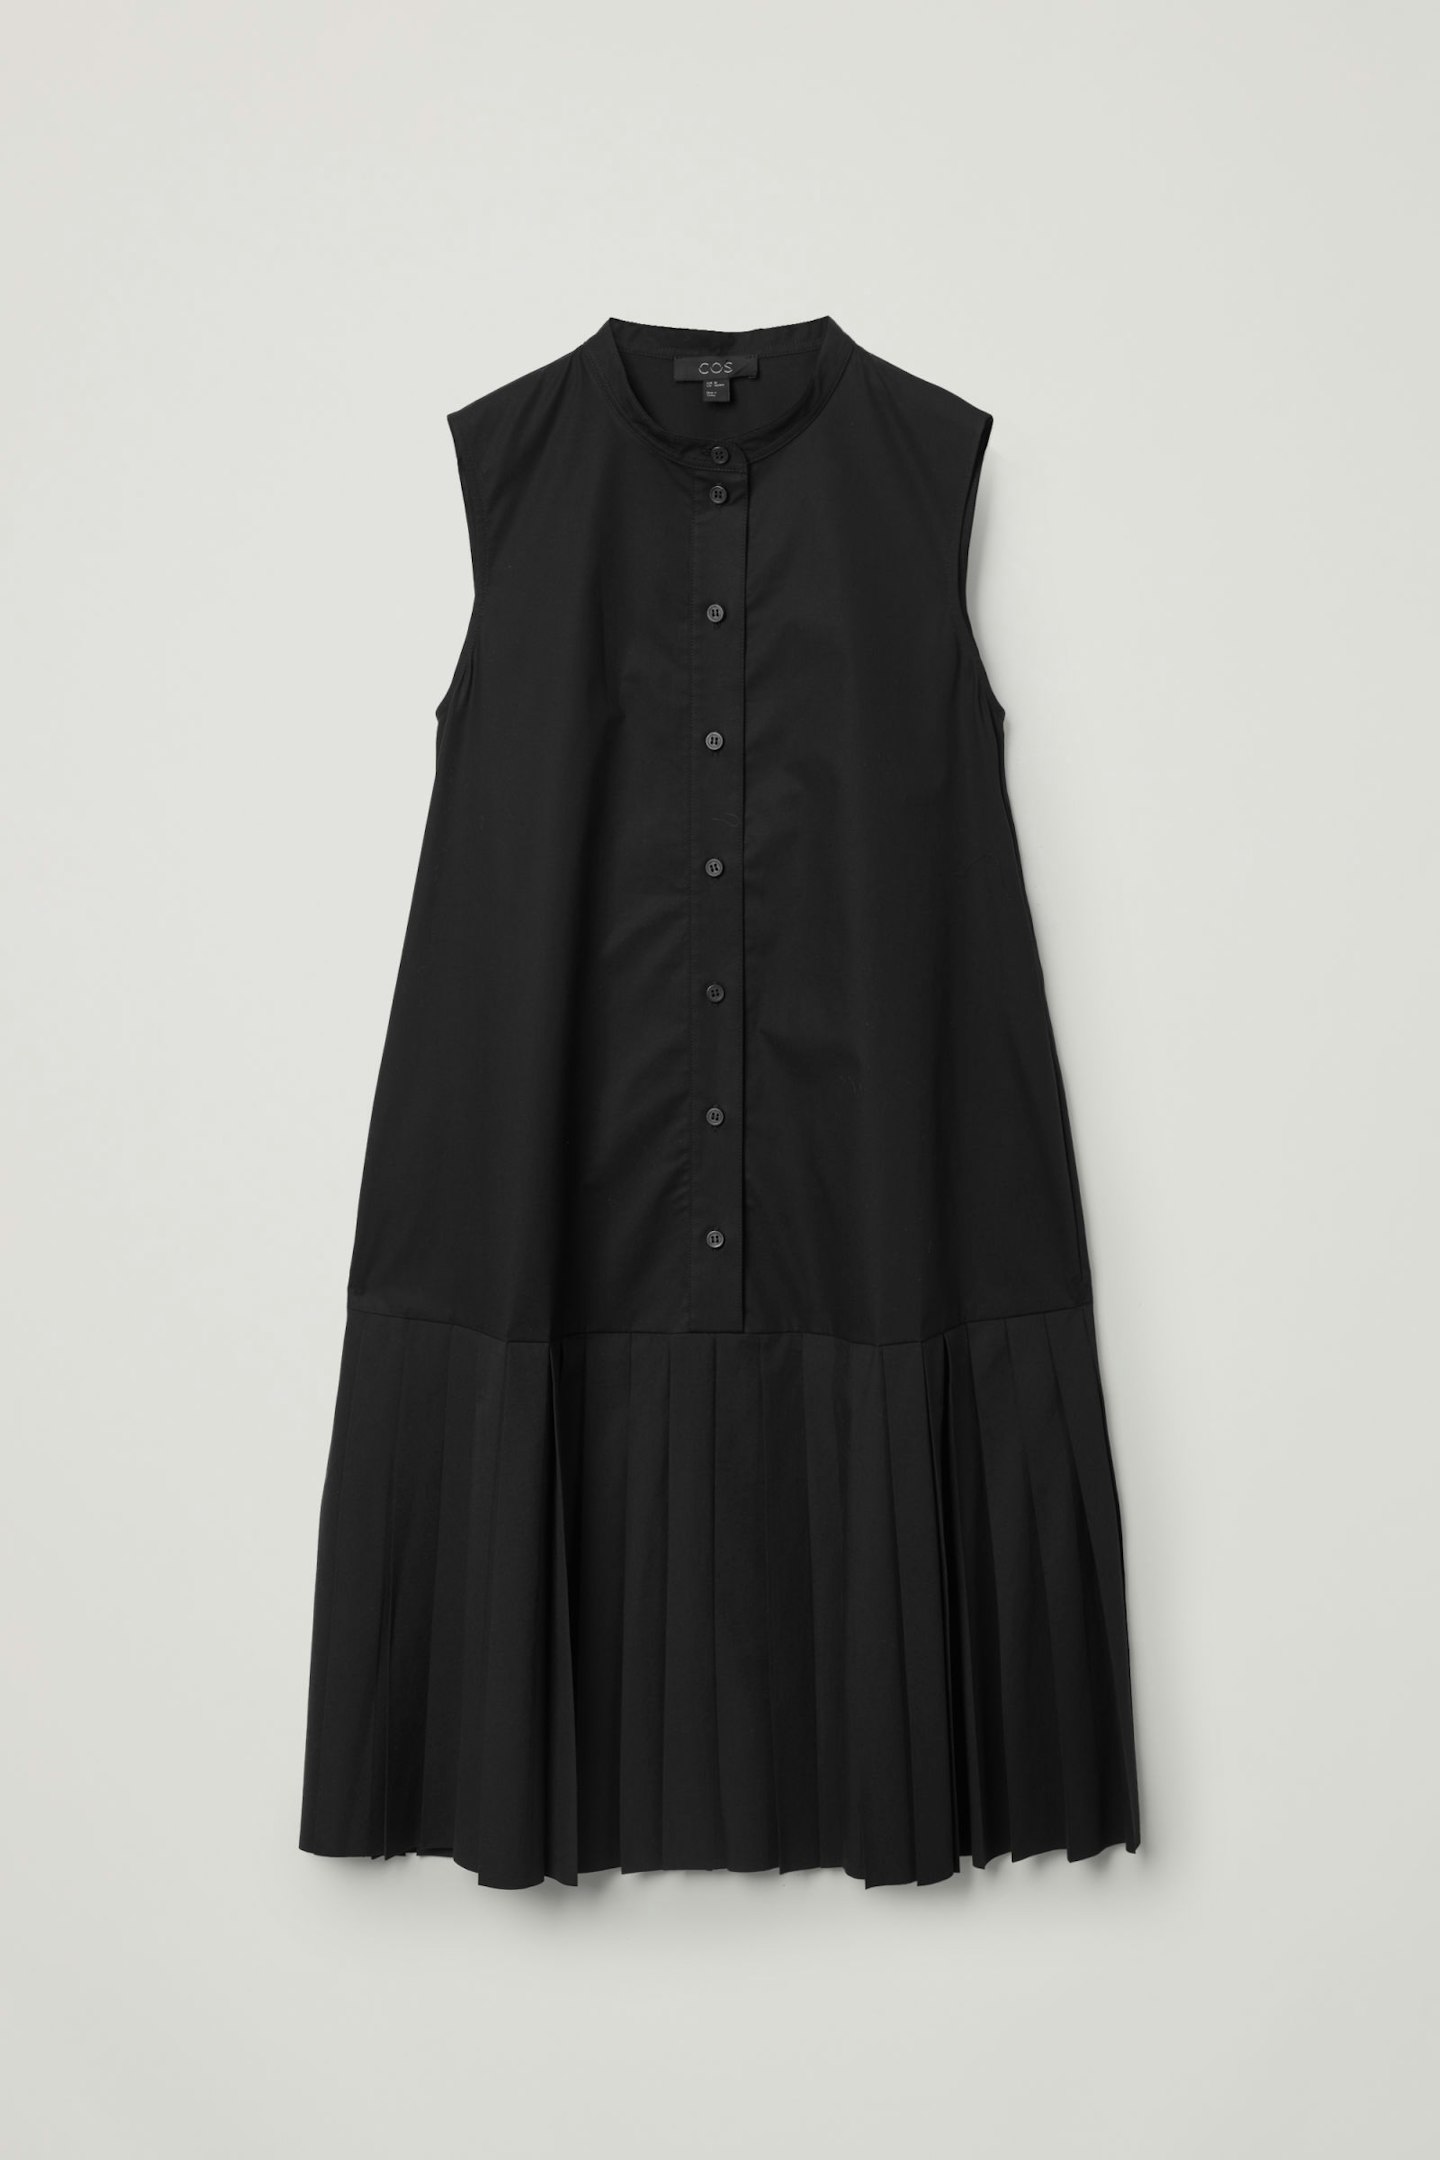 COS, Organic Cotton Pleated Panel Dress, £69